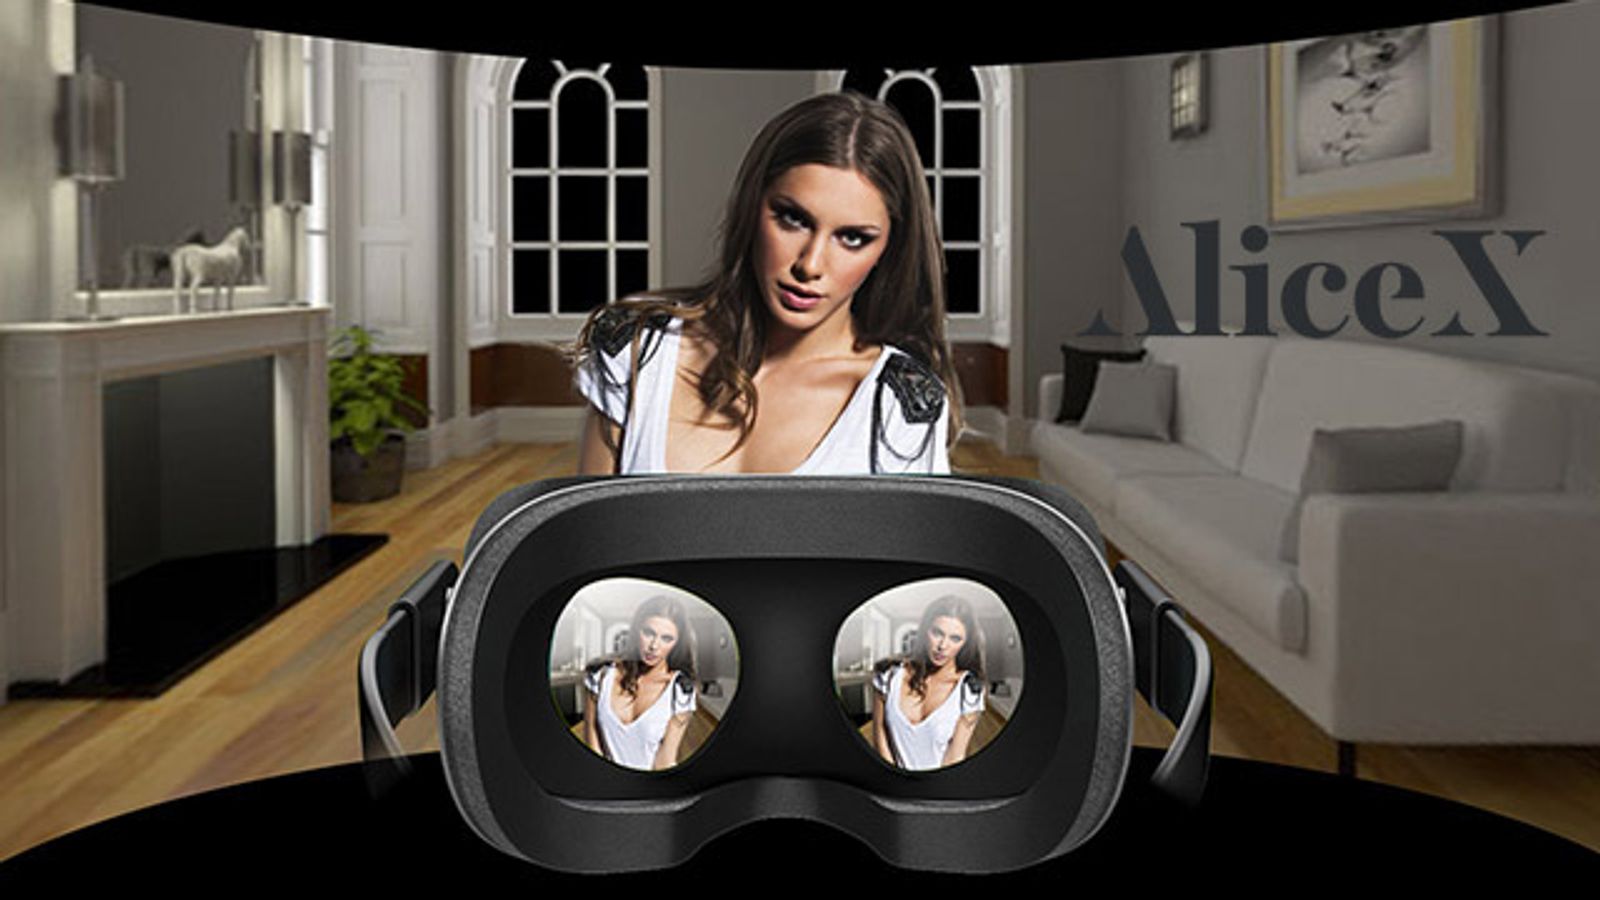 Virtual Reality Meets Live Webcam Shows with AliceX.com